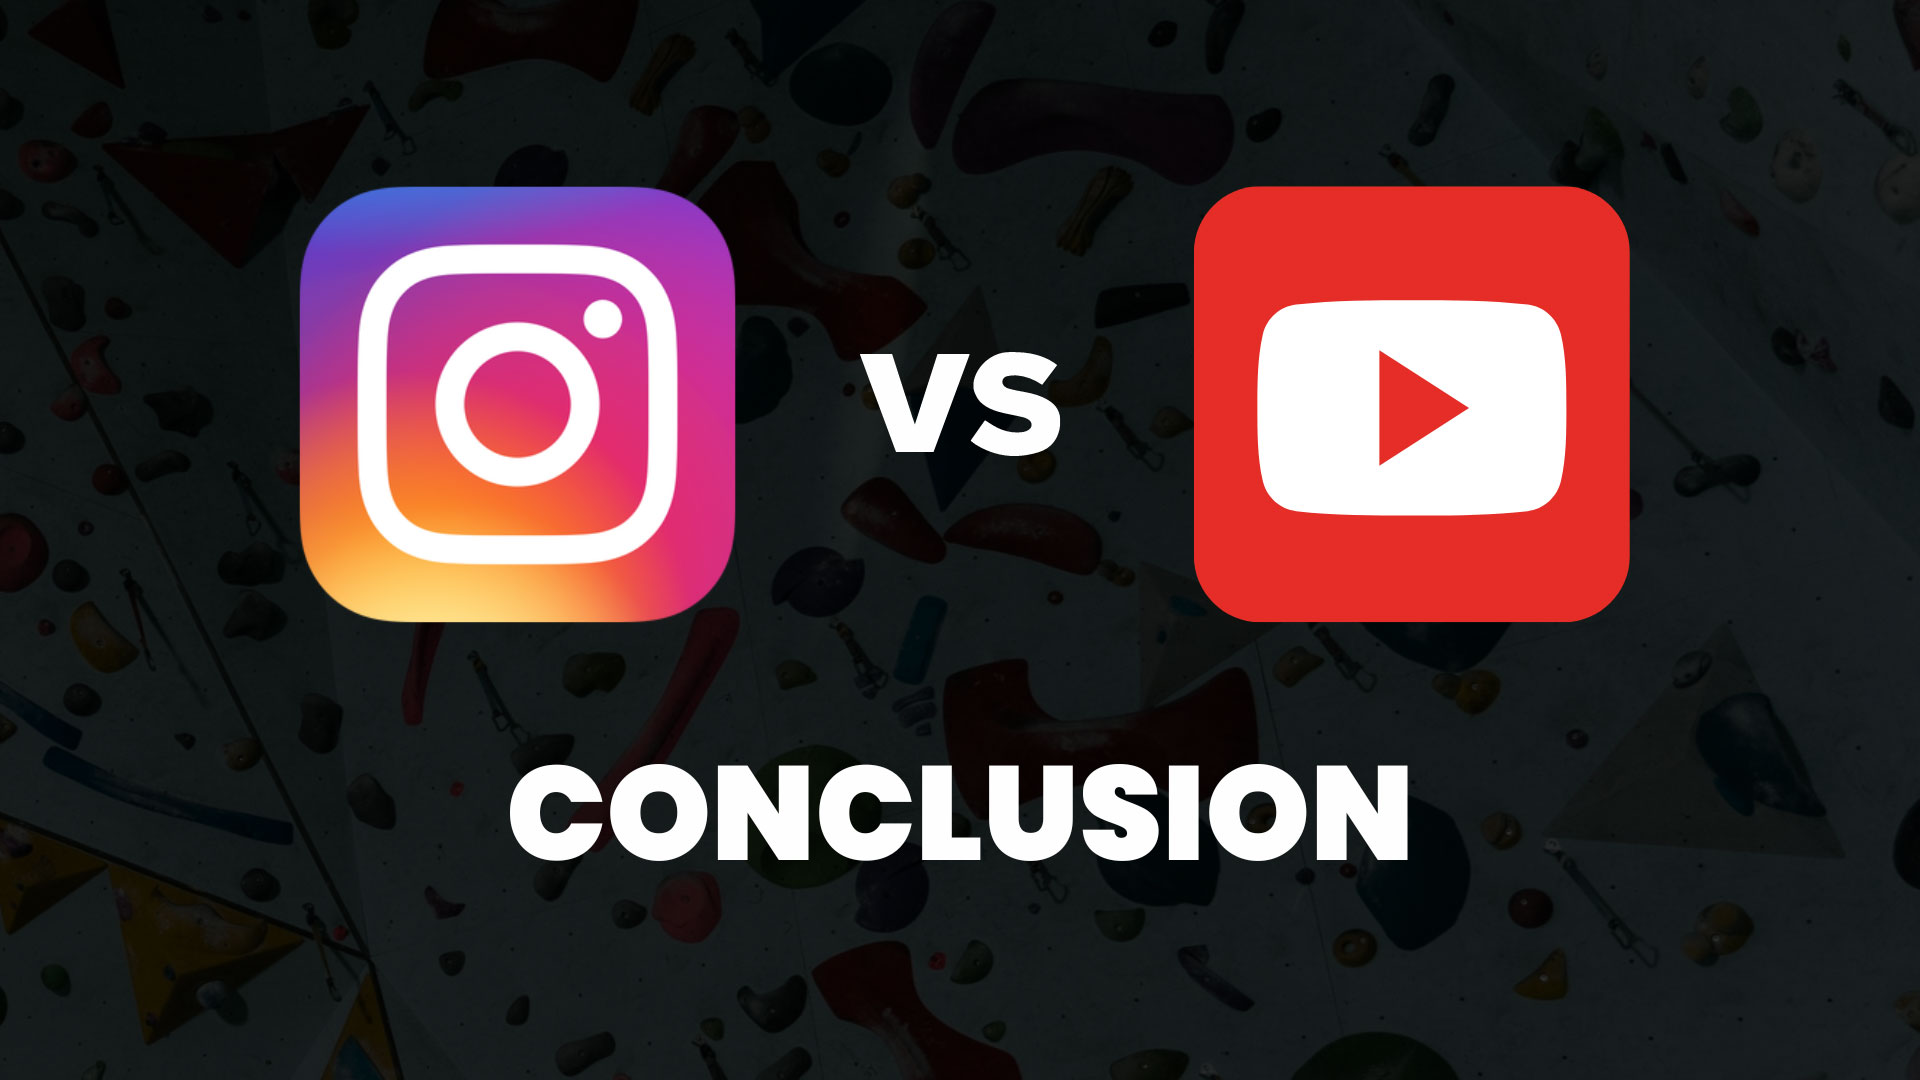 Instagram vs. YouTube conclusion